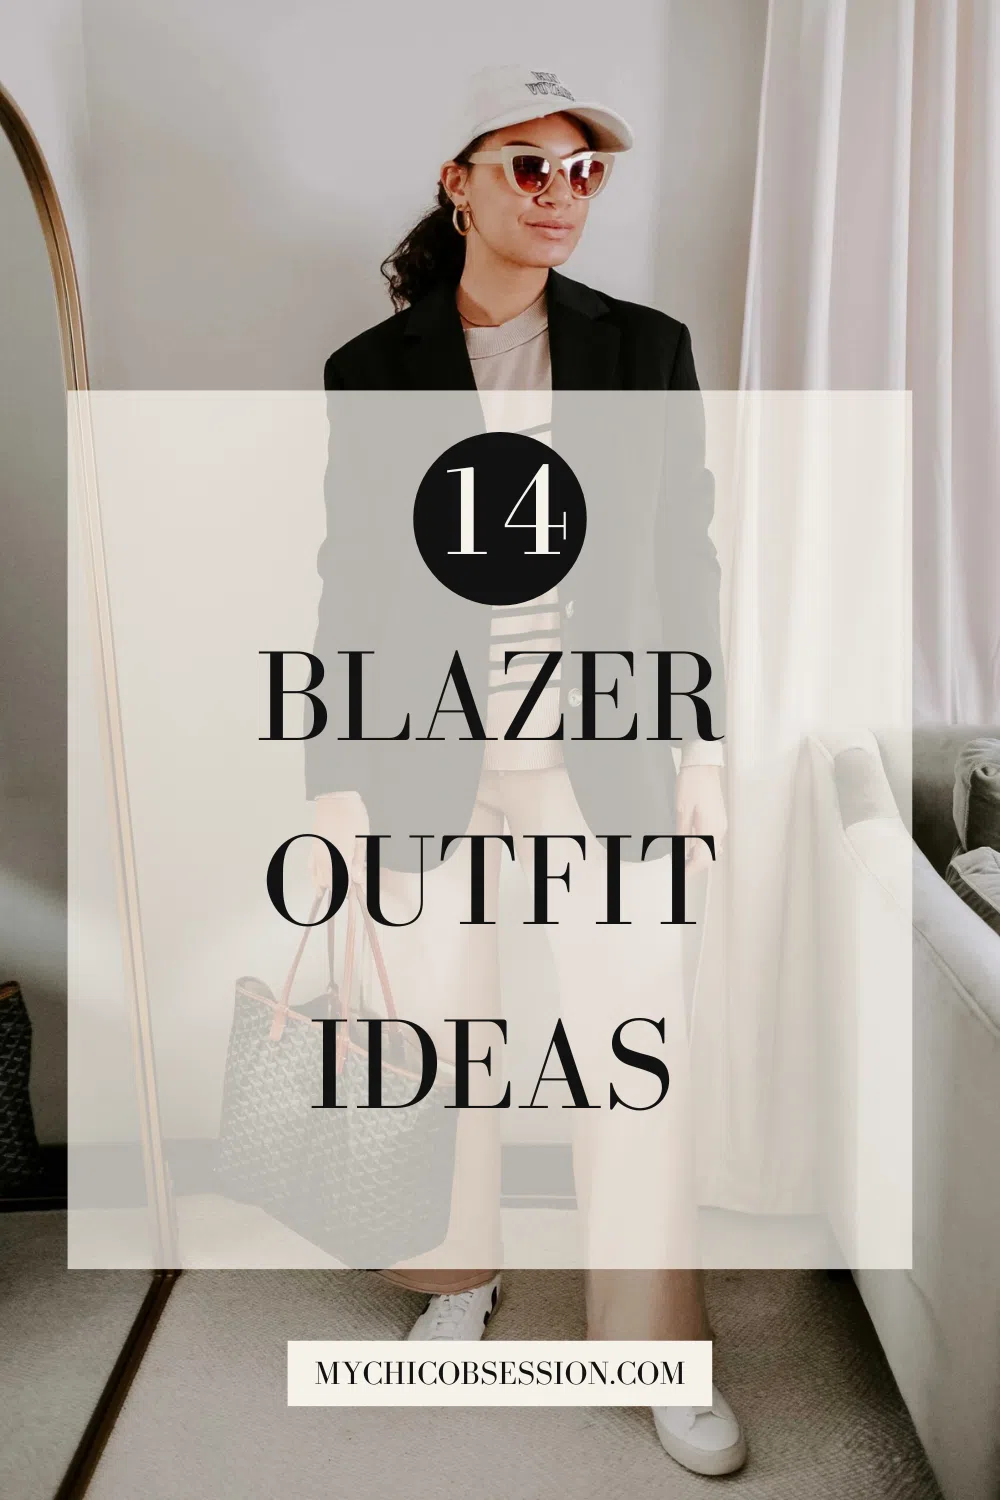 Blazer outfit ideas